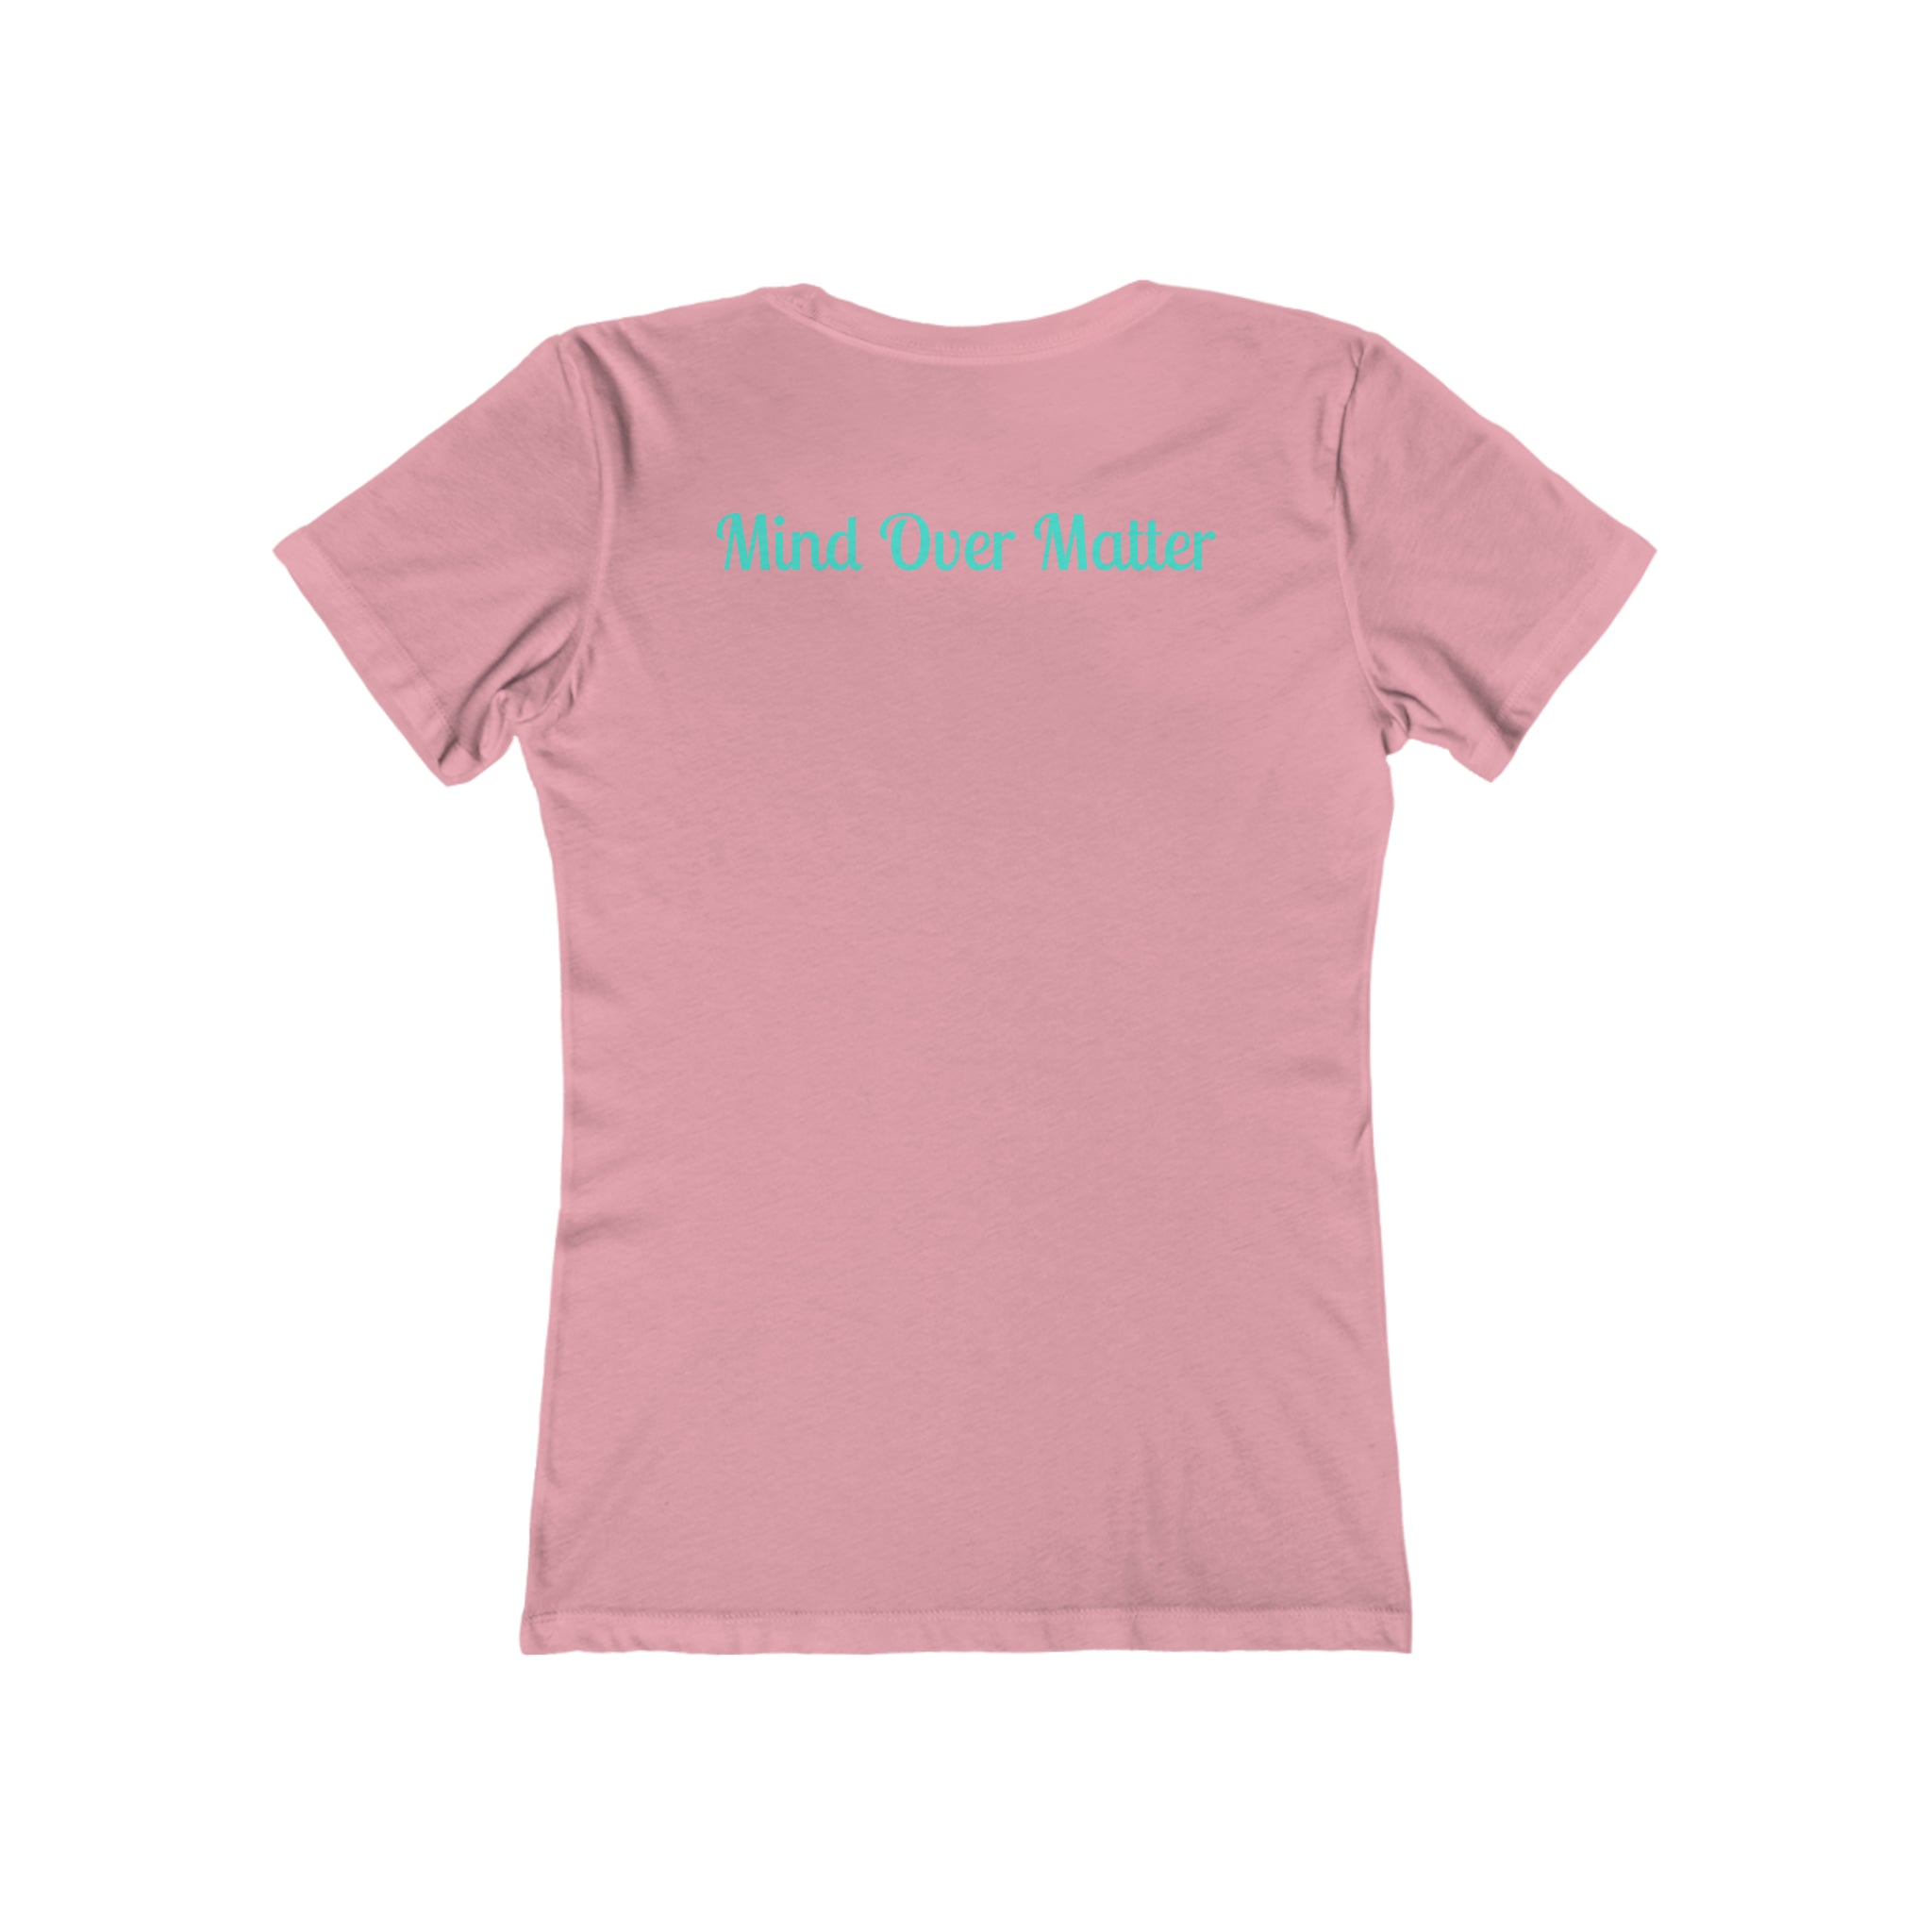 Mind over Matter Boyfriend Tee: empower your mindset Solid Light Pink Awareness Break the Stigma Mental Health Support Pledge Donation slim fit shirt Tee women shirt T-Shirt 3270399673540754352_2048_e16d5546-175d-492a-a1be-a5b75a491681 Printify